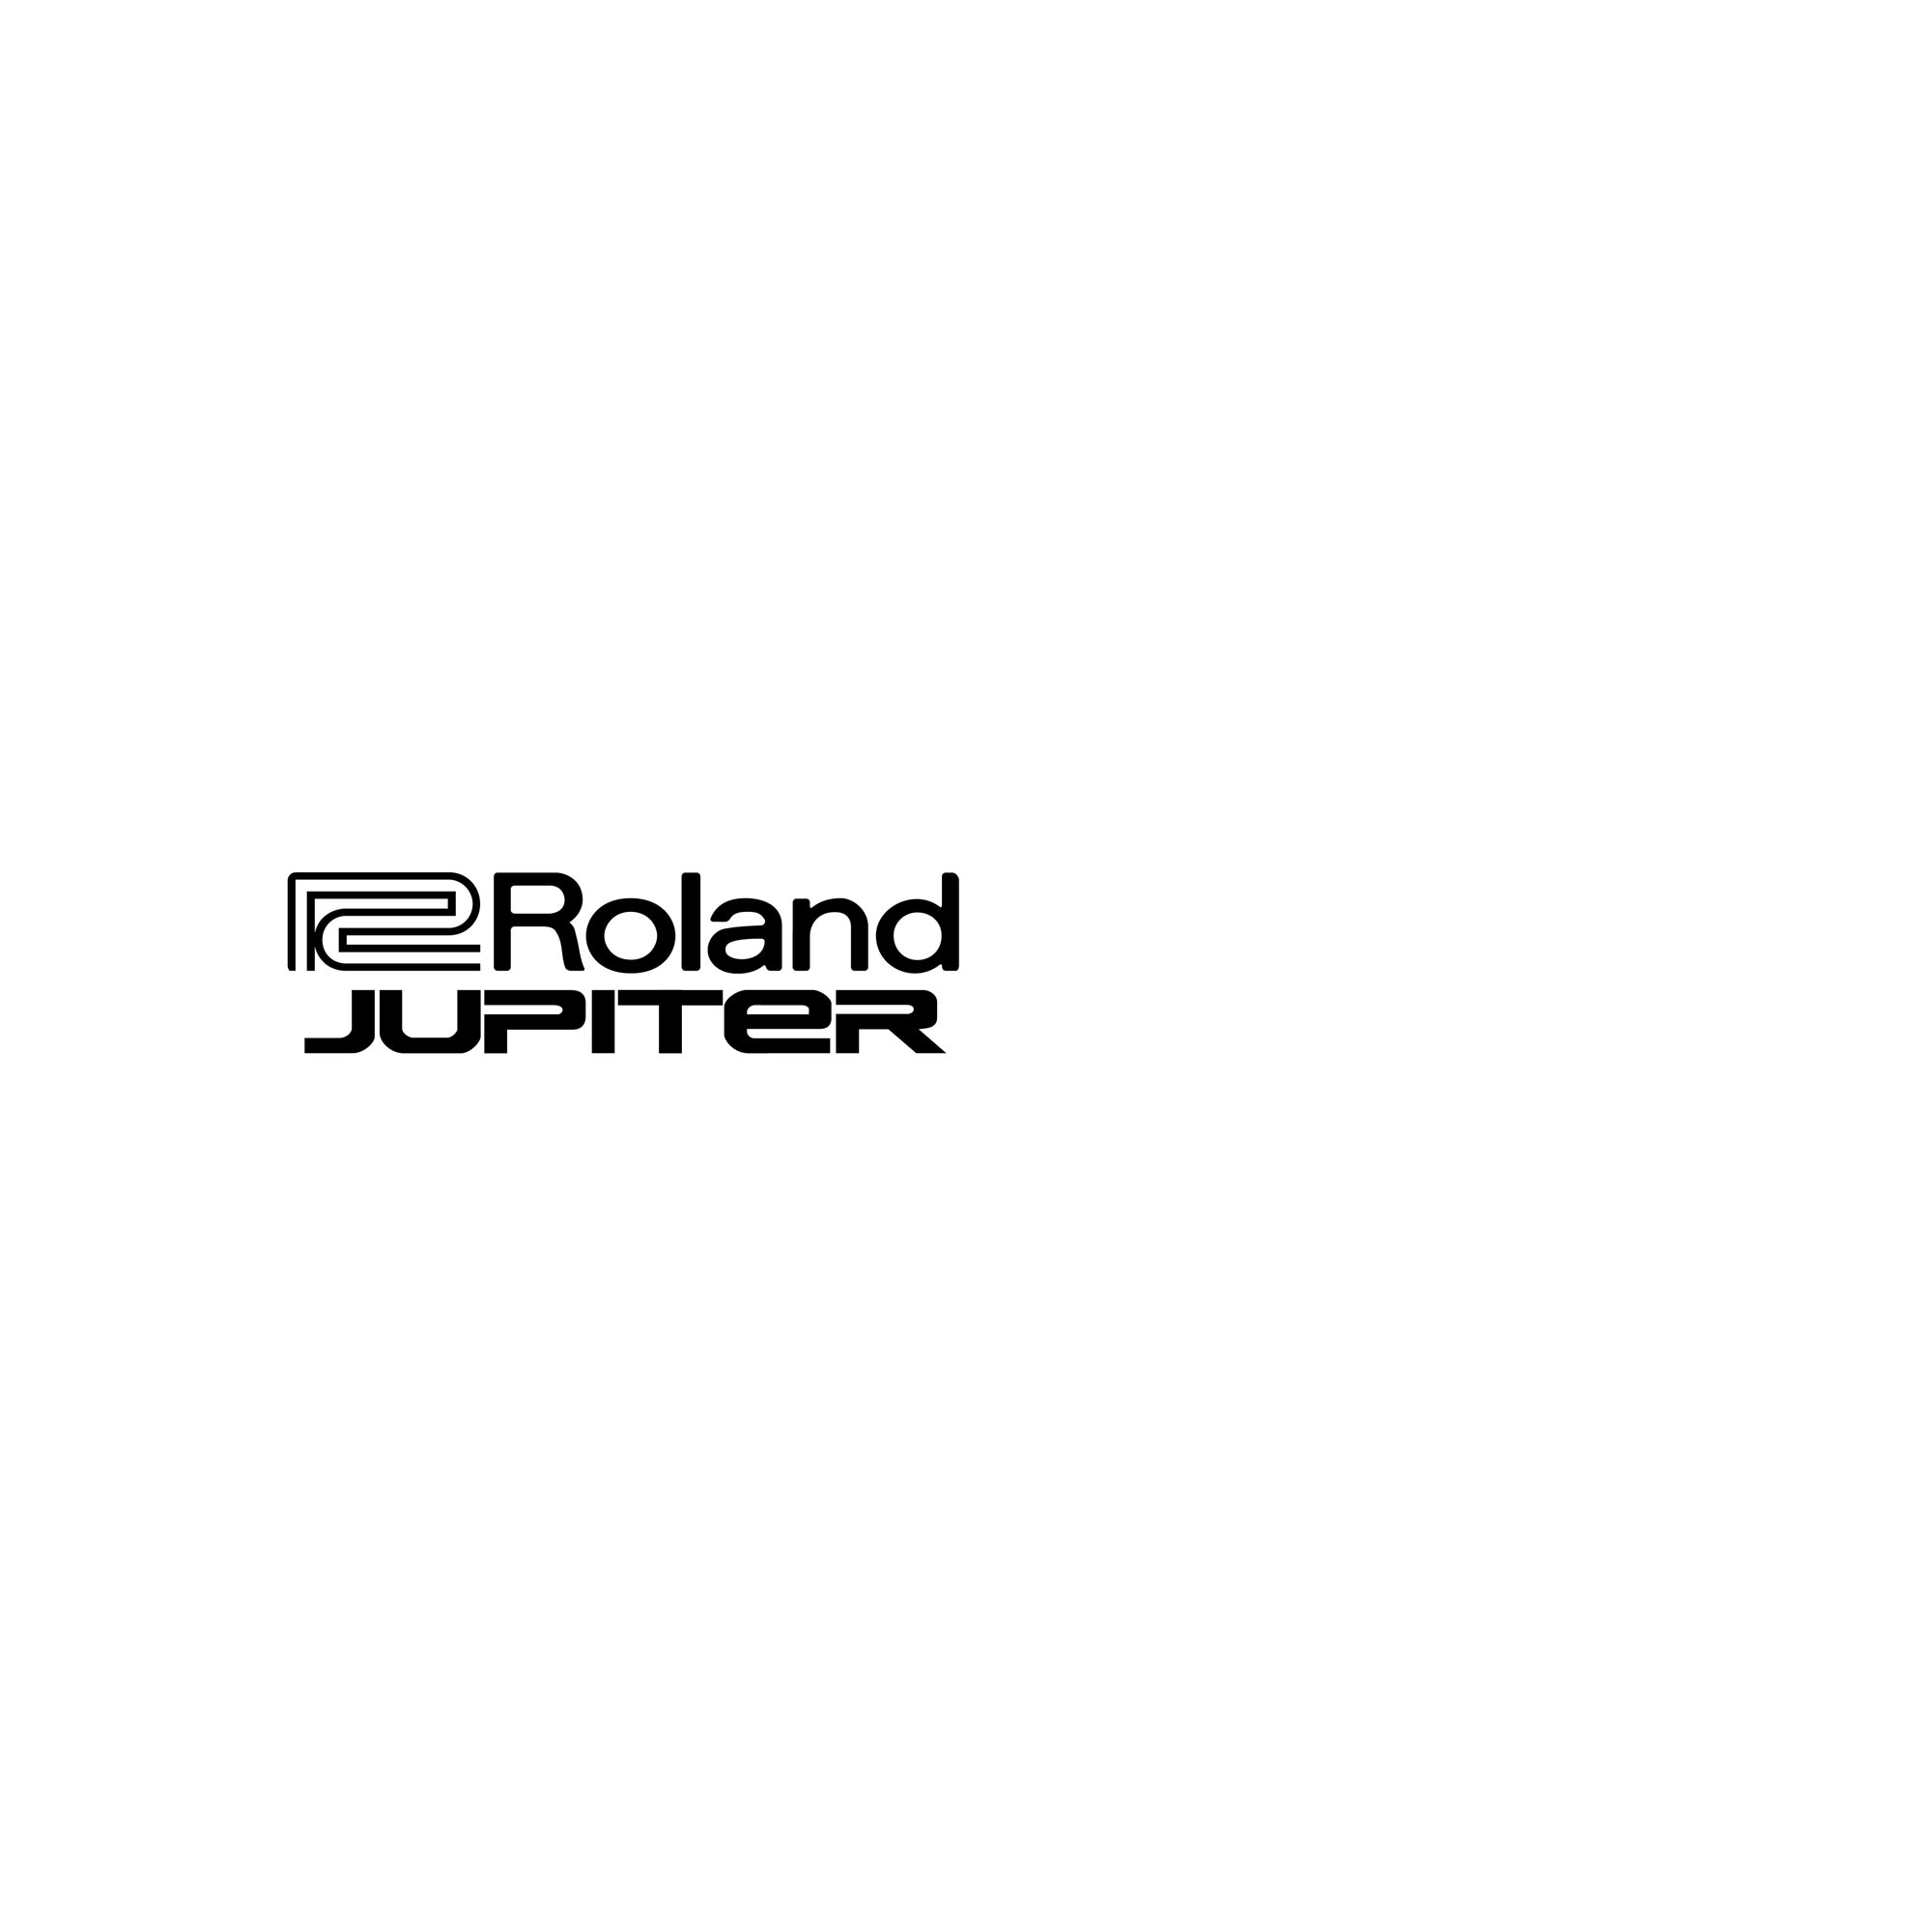 Roland Set To Release New Jupiter Keyboard At Messe